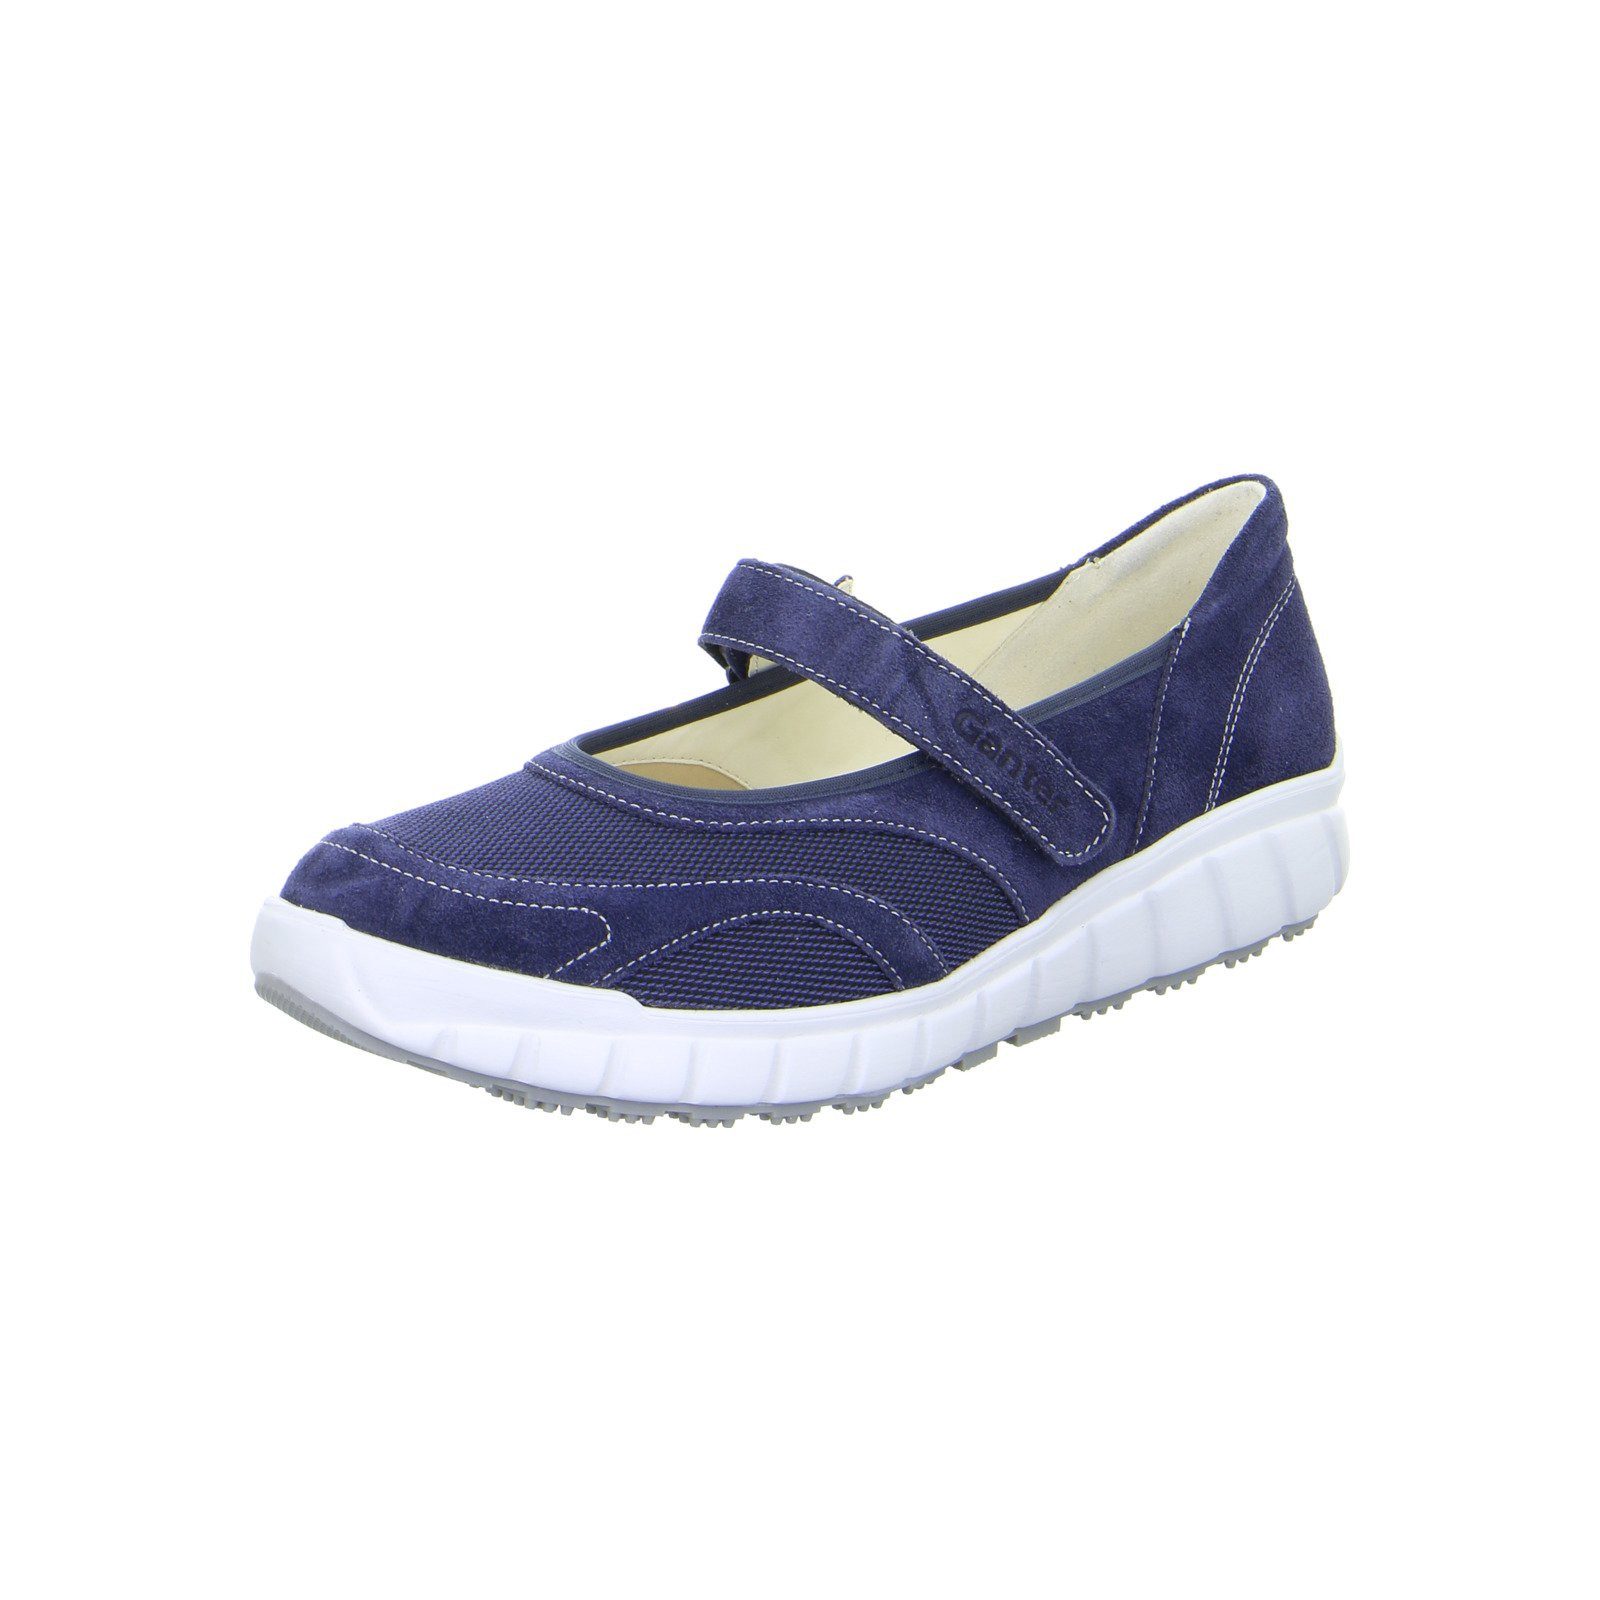 Ganter Evo - Damen Schuhe Slipper blau